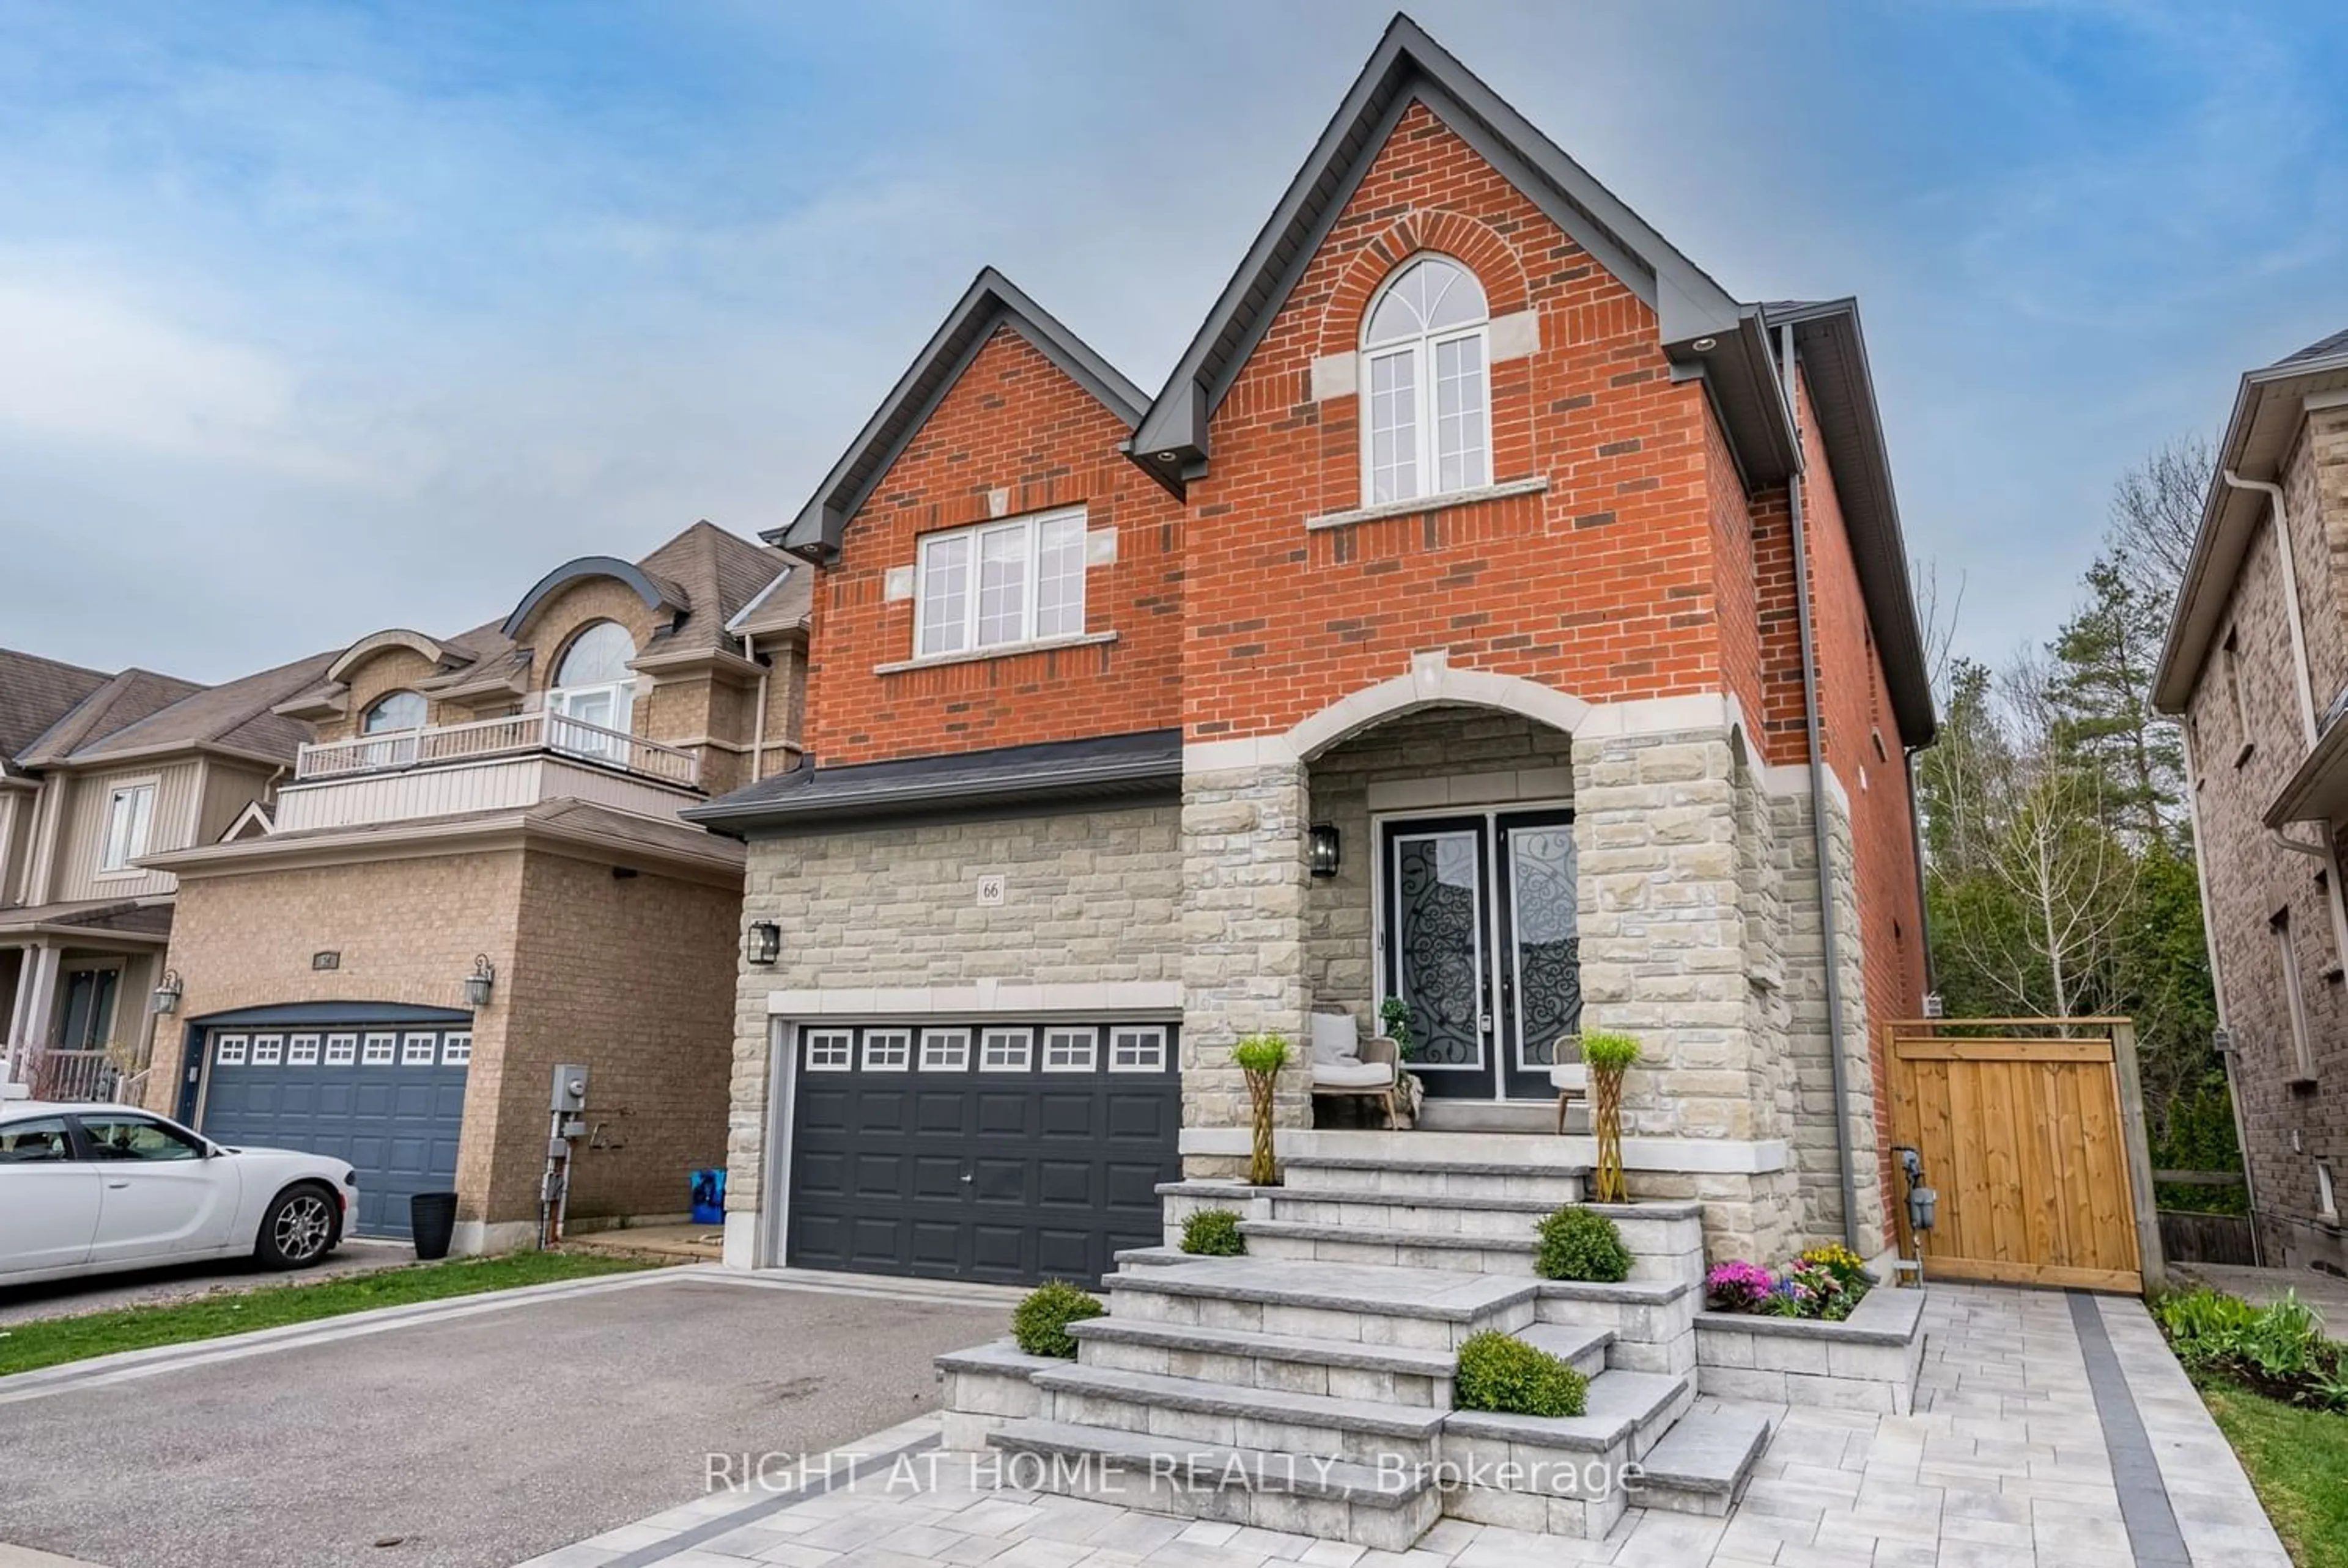 Home with brick exterior material for 66 Harry Gay Dr, Clarington Ontario L1E 0B1